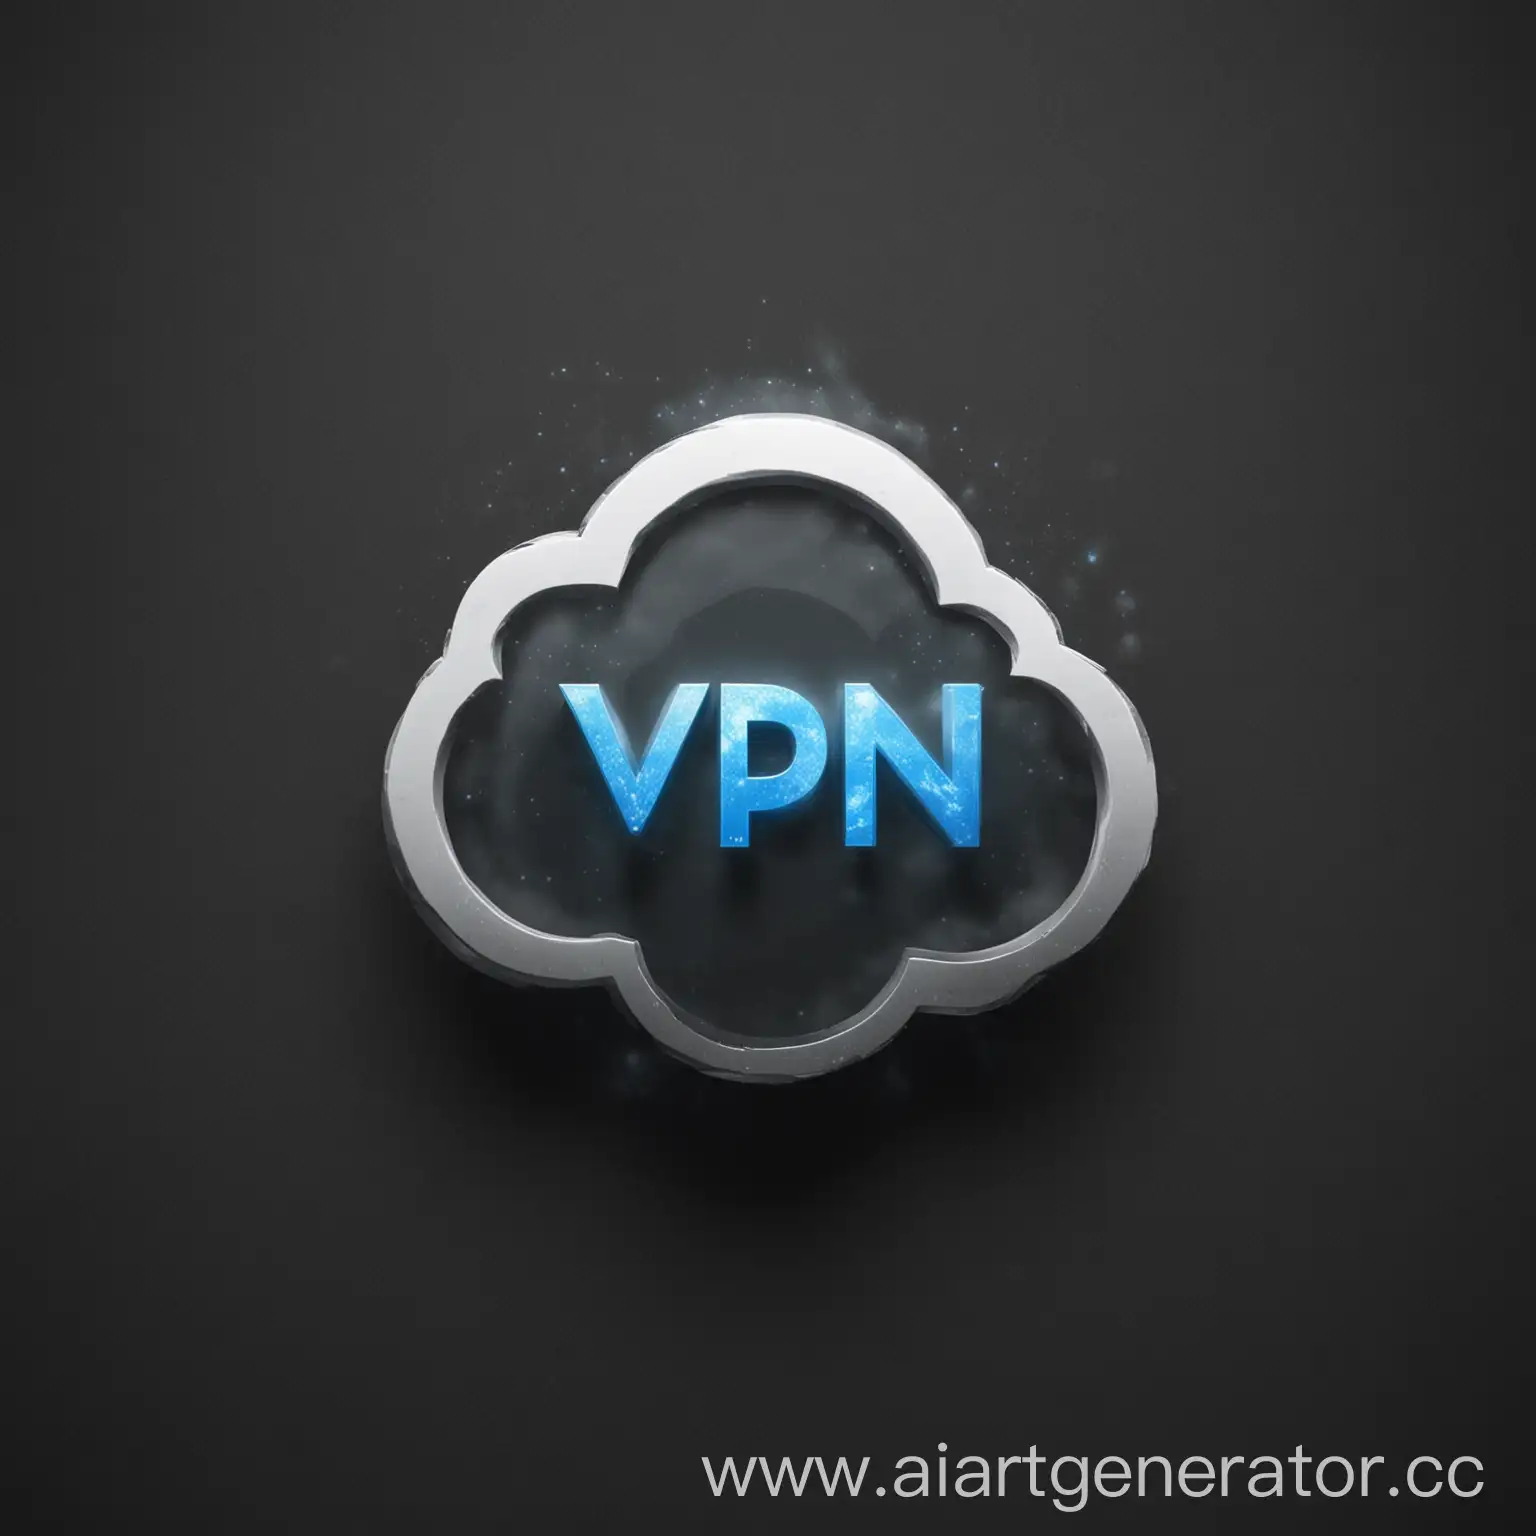 Futuristic-VPN-Logo-Design-by-NeiroCloud-in-4K-Resolution